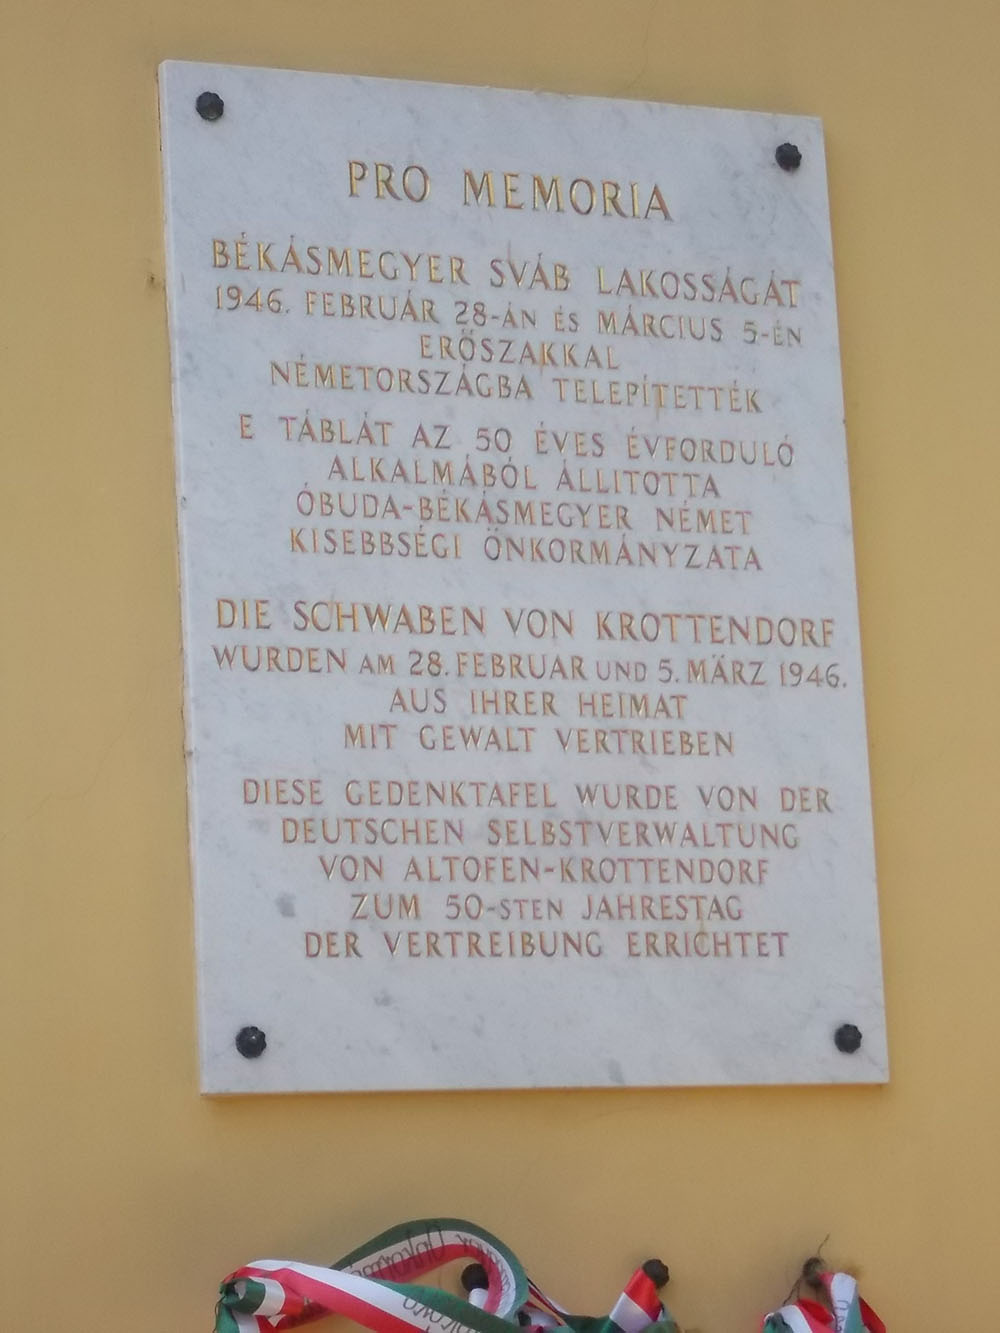 Memorial Ethnic Germans Bksmegyer